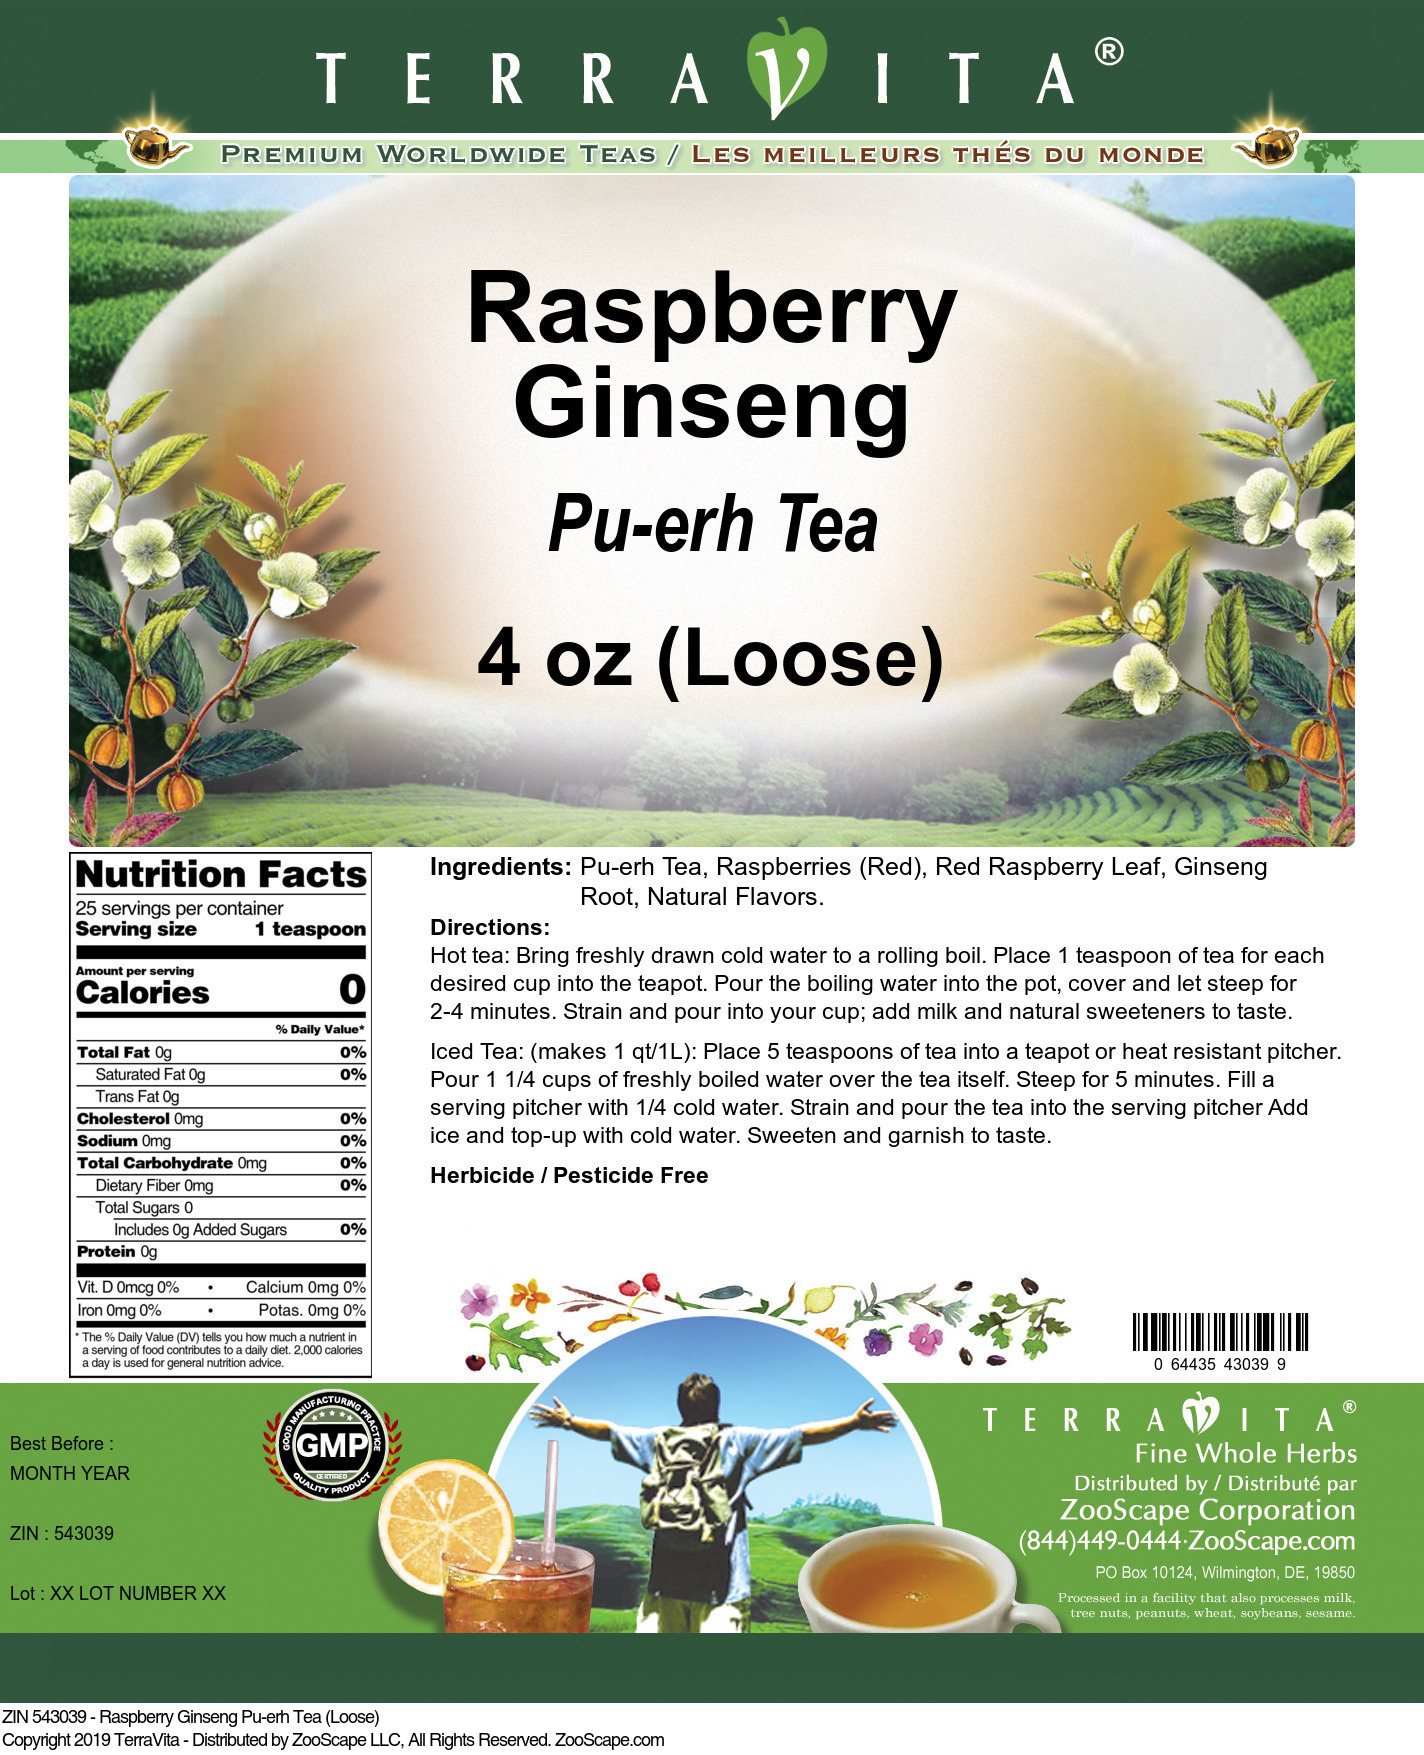 Raspberry Ginseng Pu-erh Tea (Loose) - Label